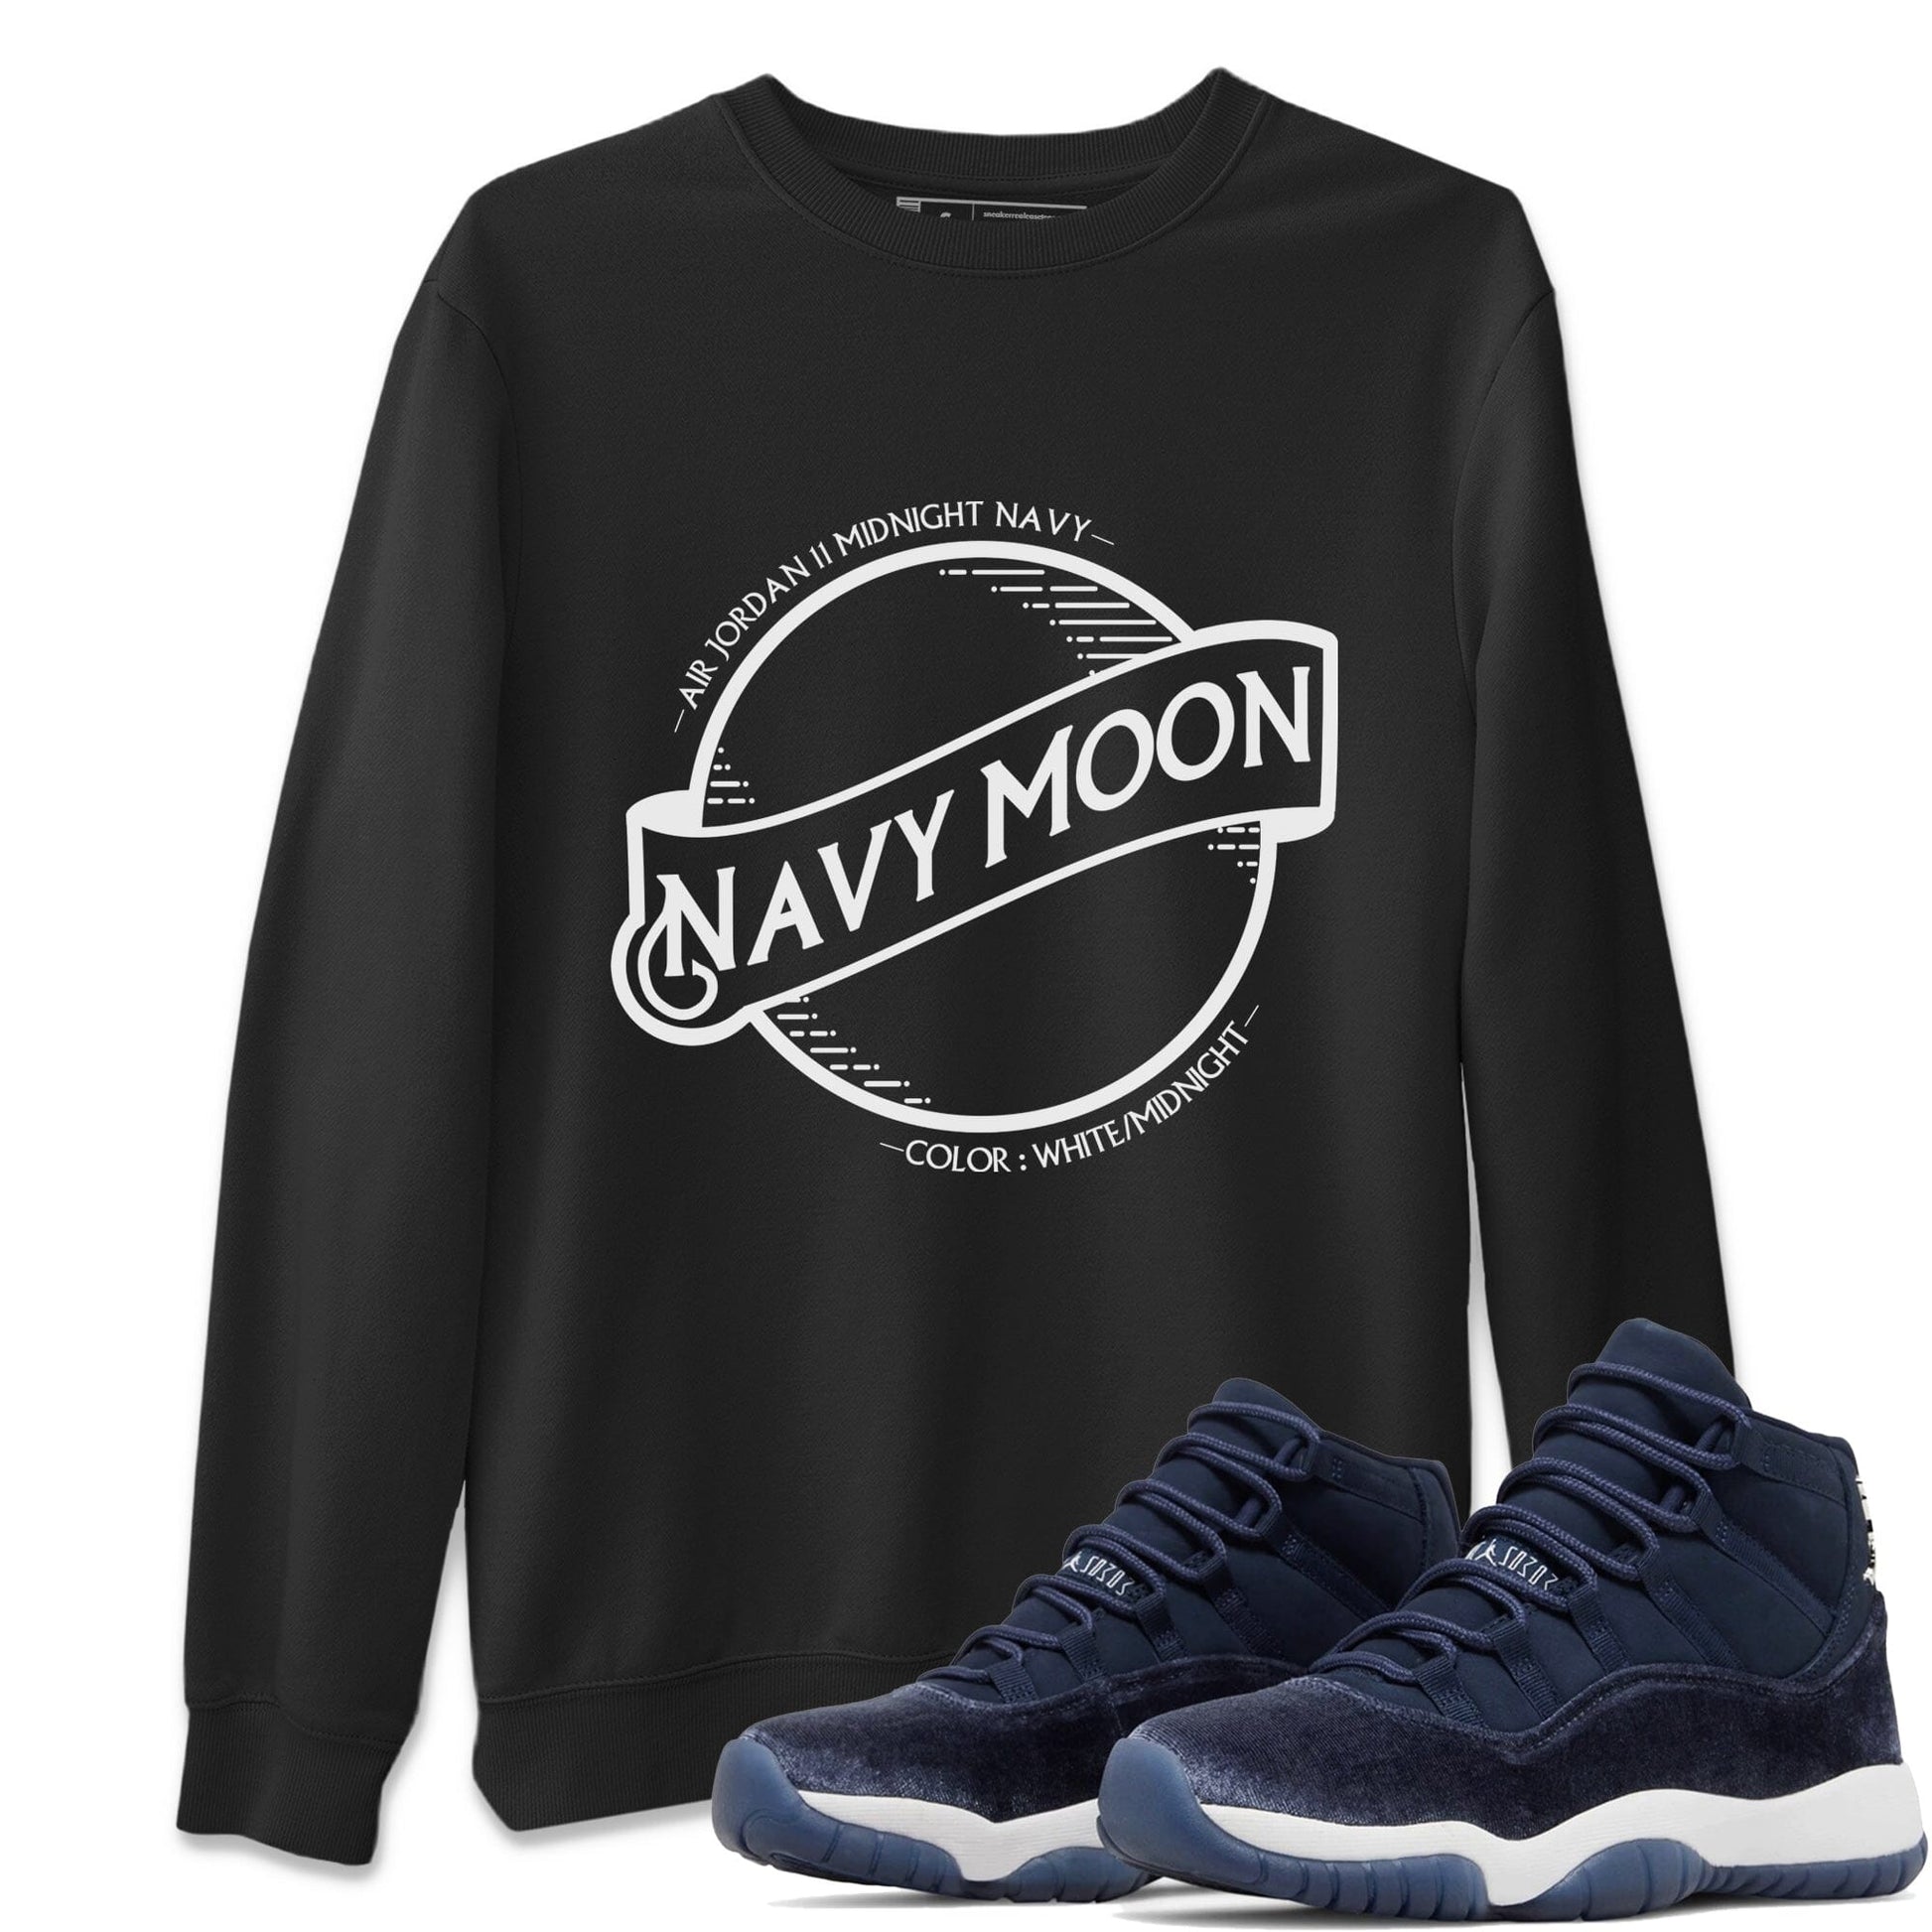 Jordan 11 Midnight Navy Sneaker Match Tees Navy Moon Sneaker Tees Jordan 11 Midnight Navy Sneaker Release Tees Unisex Shirts